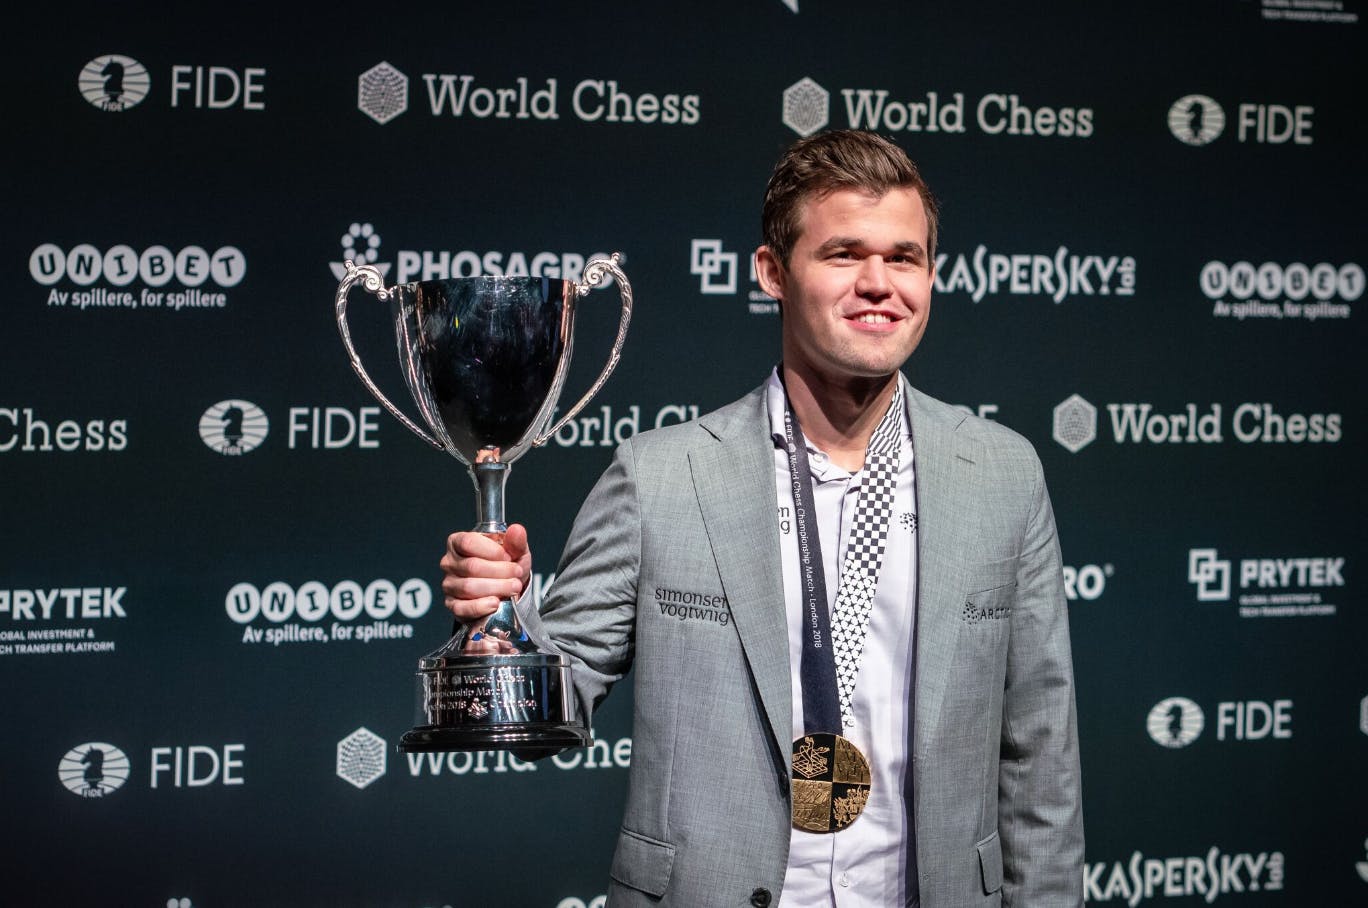 Magnus winning the 2018 World Chess Championship in London